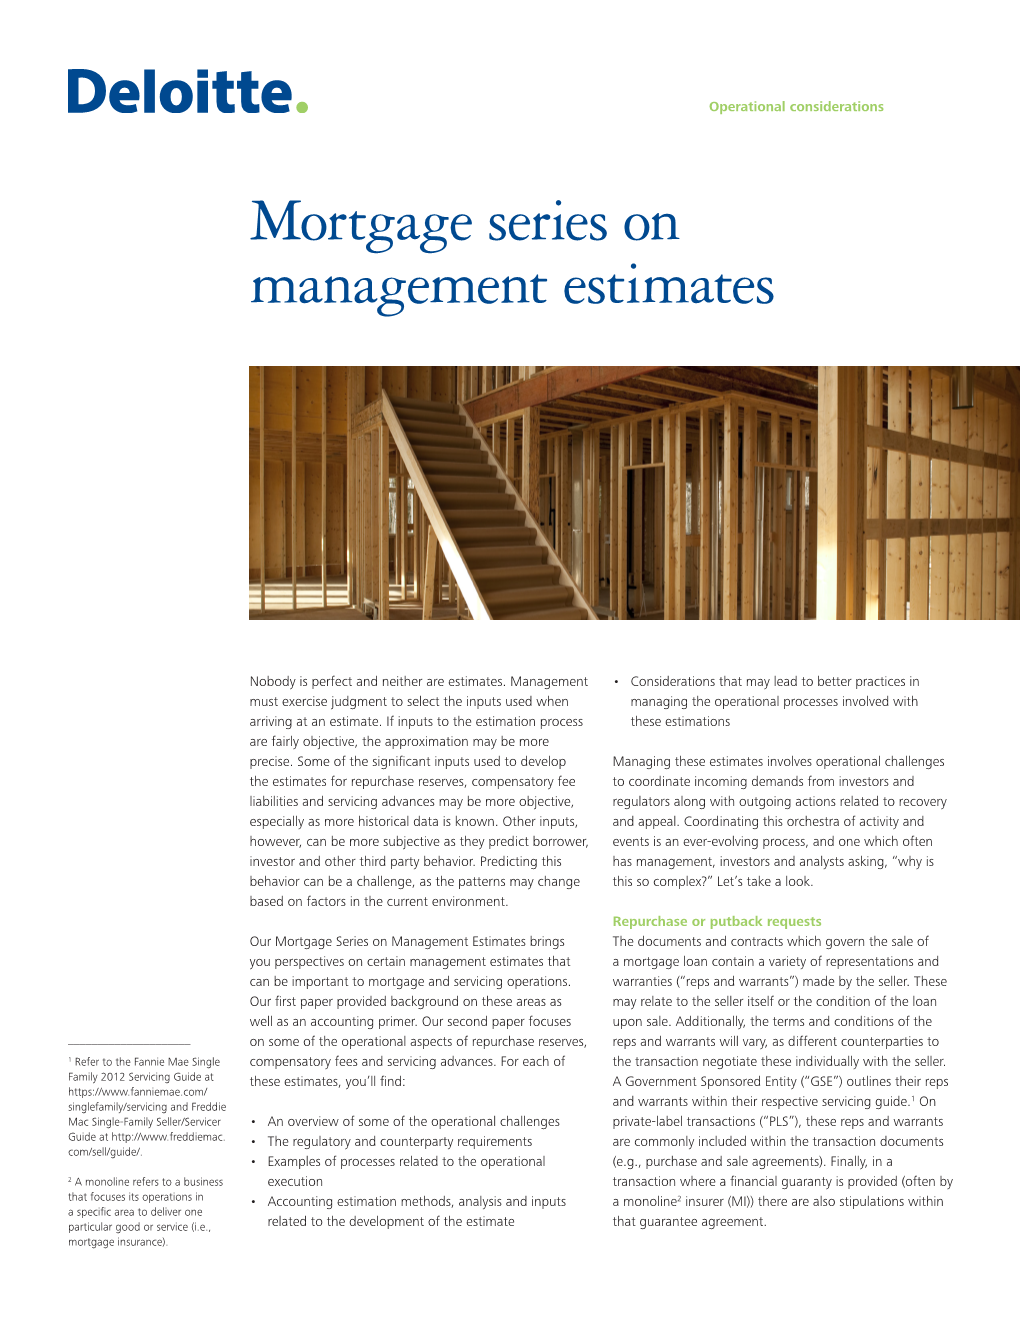 Mortgage Series on Management Estimates